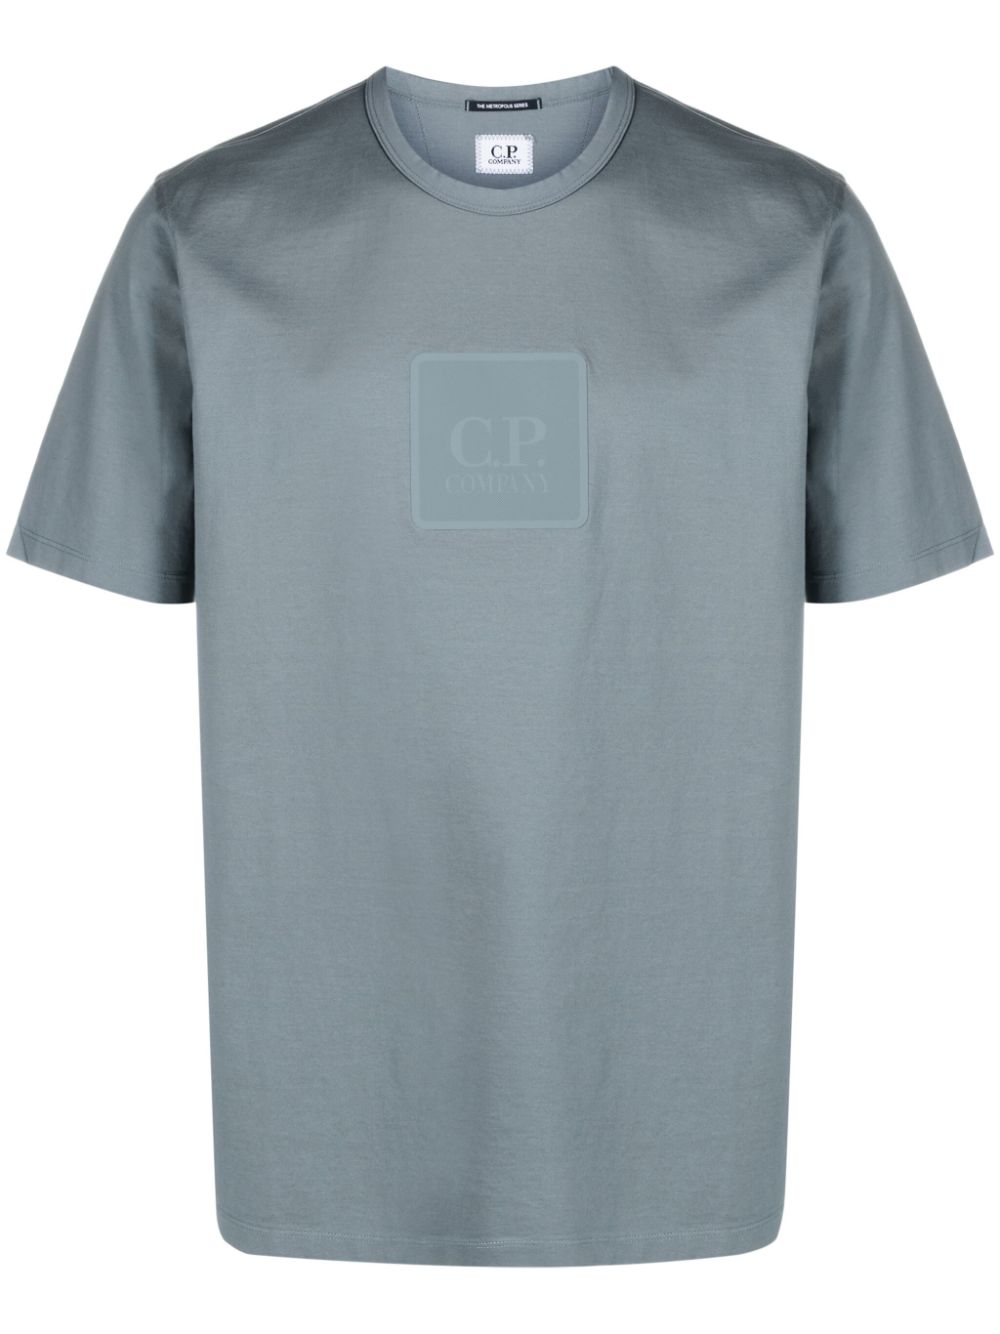 C.P. Company T-shirt met mercerised jersey Grijs